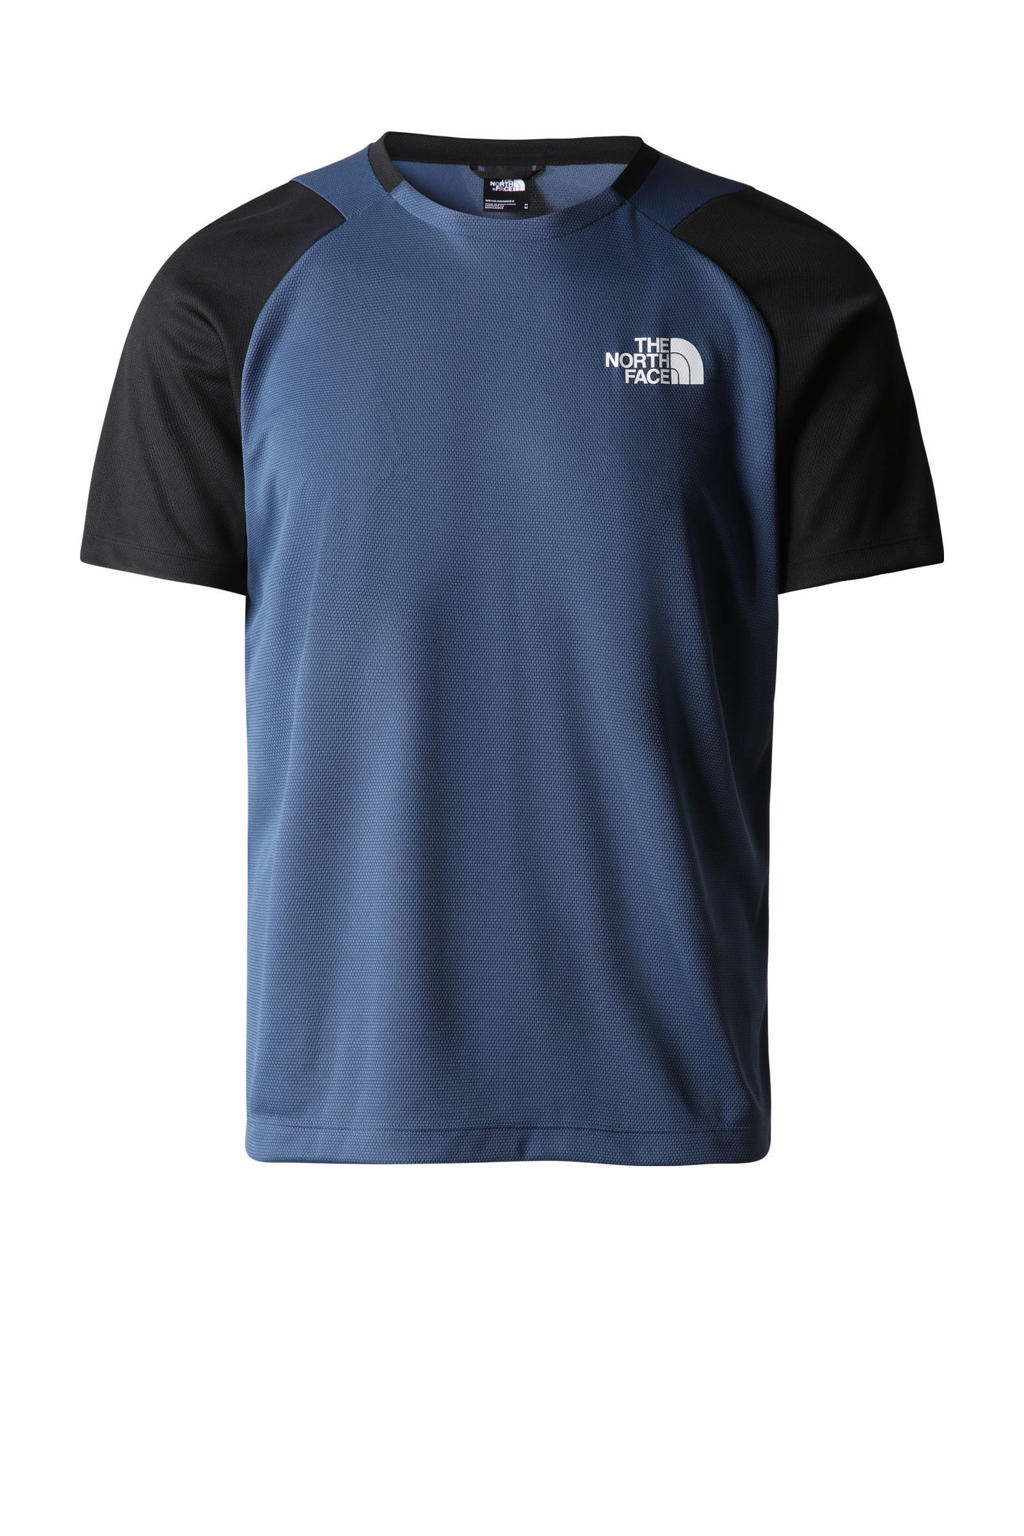 The North Face oversized T-shirt met logo blauw/zwart